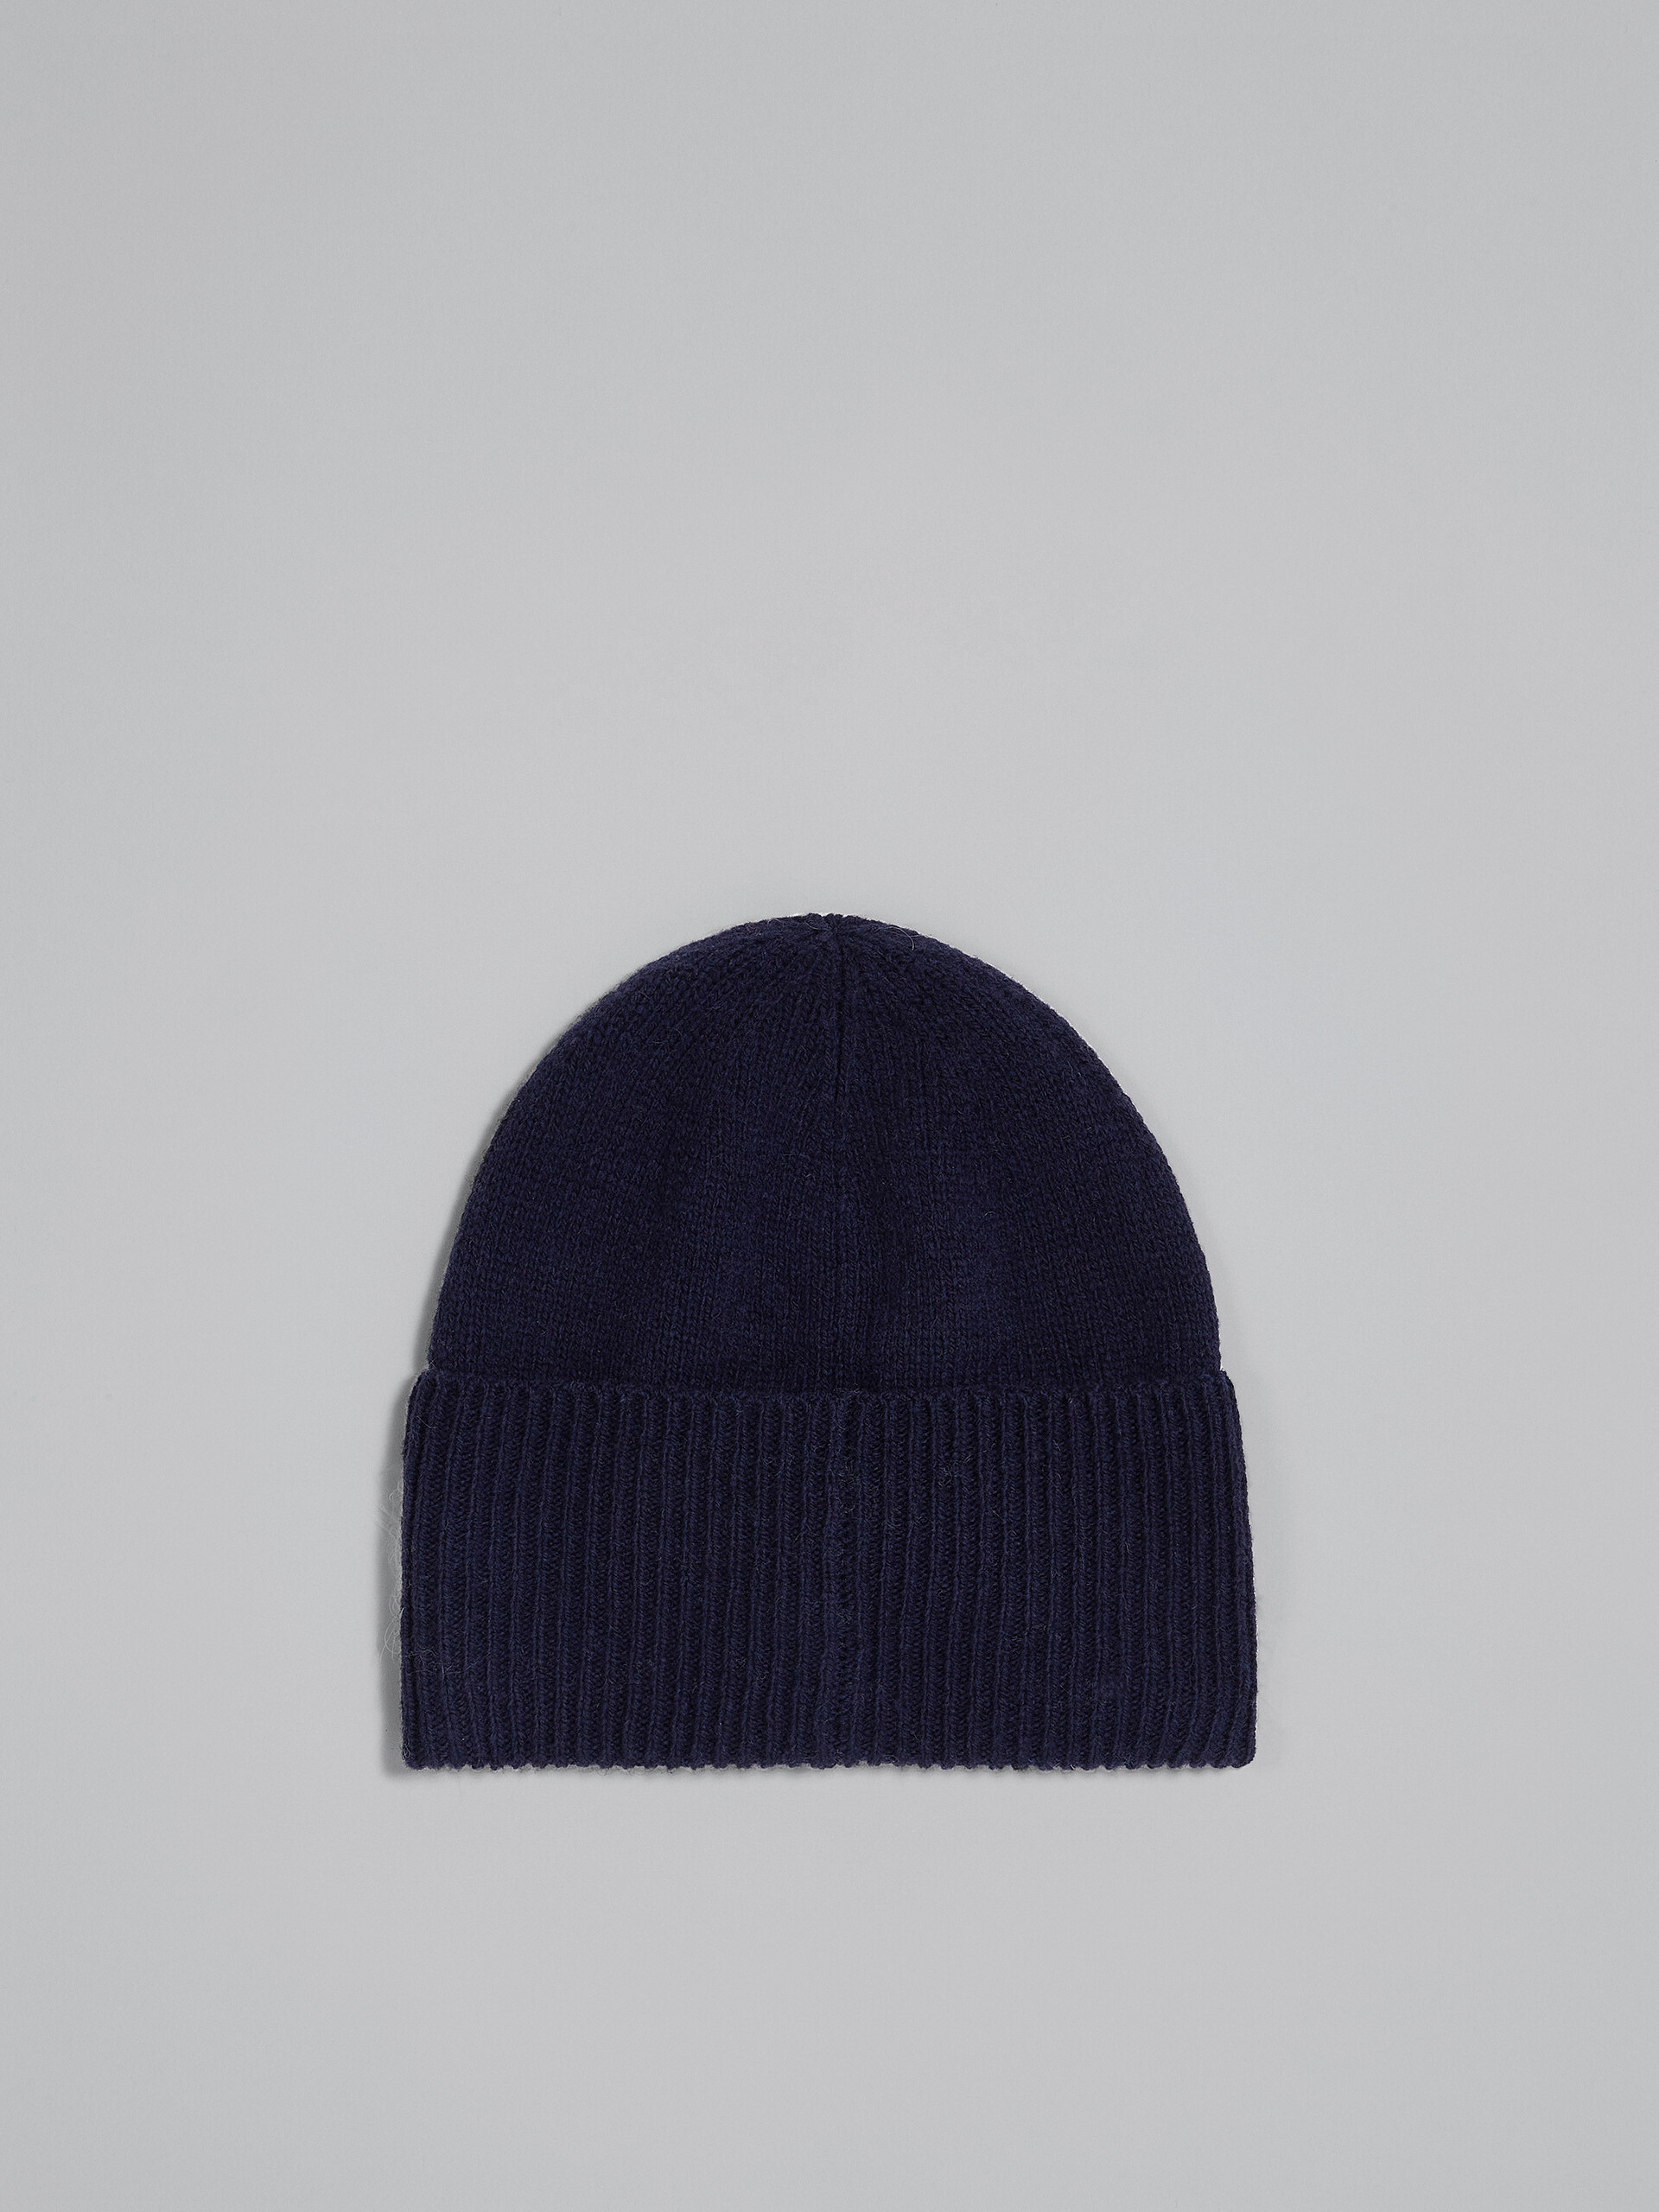 Shetland wool logo beanie - Hats - Image 3